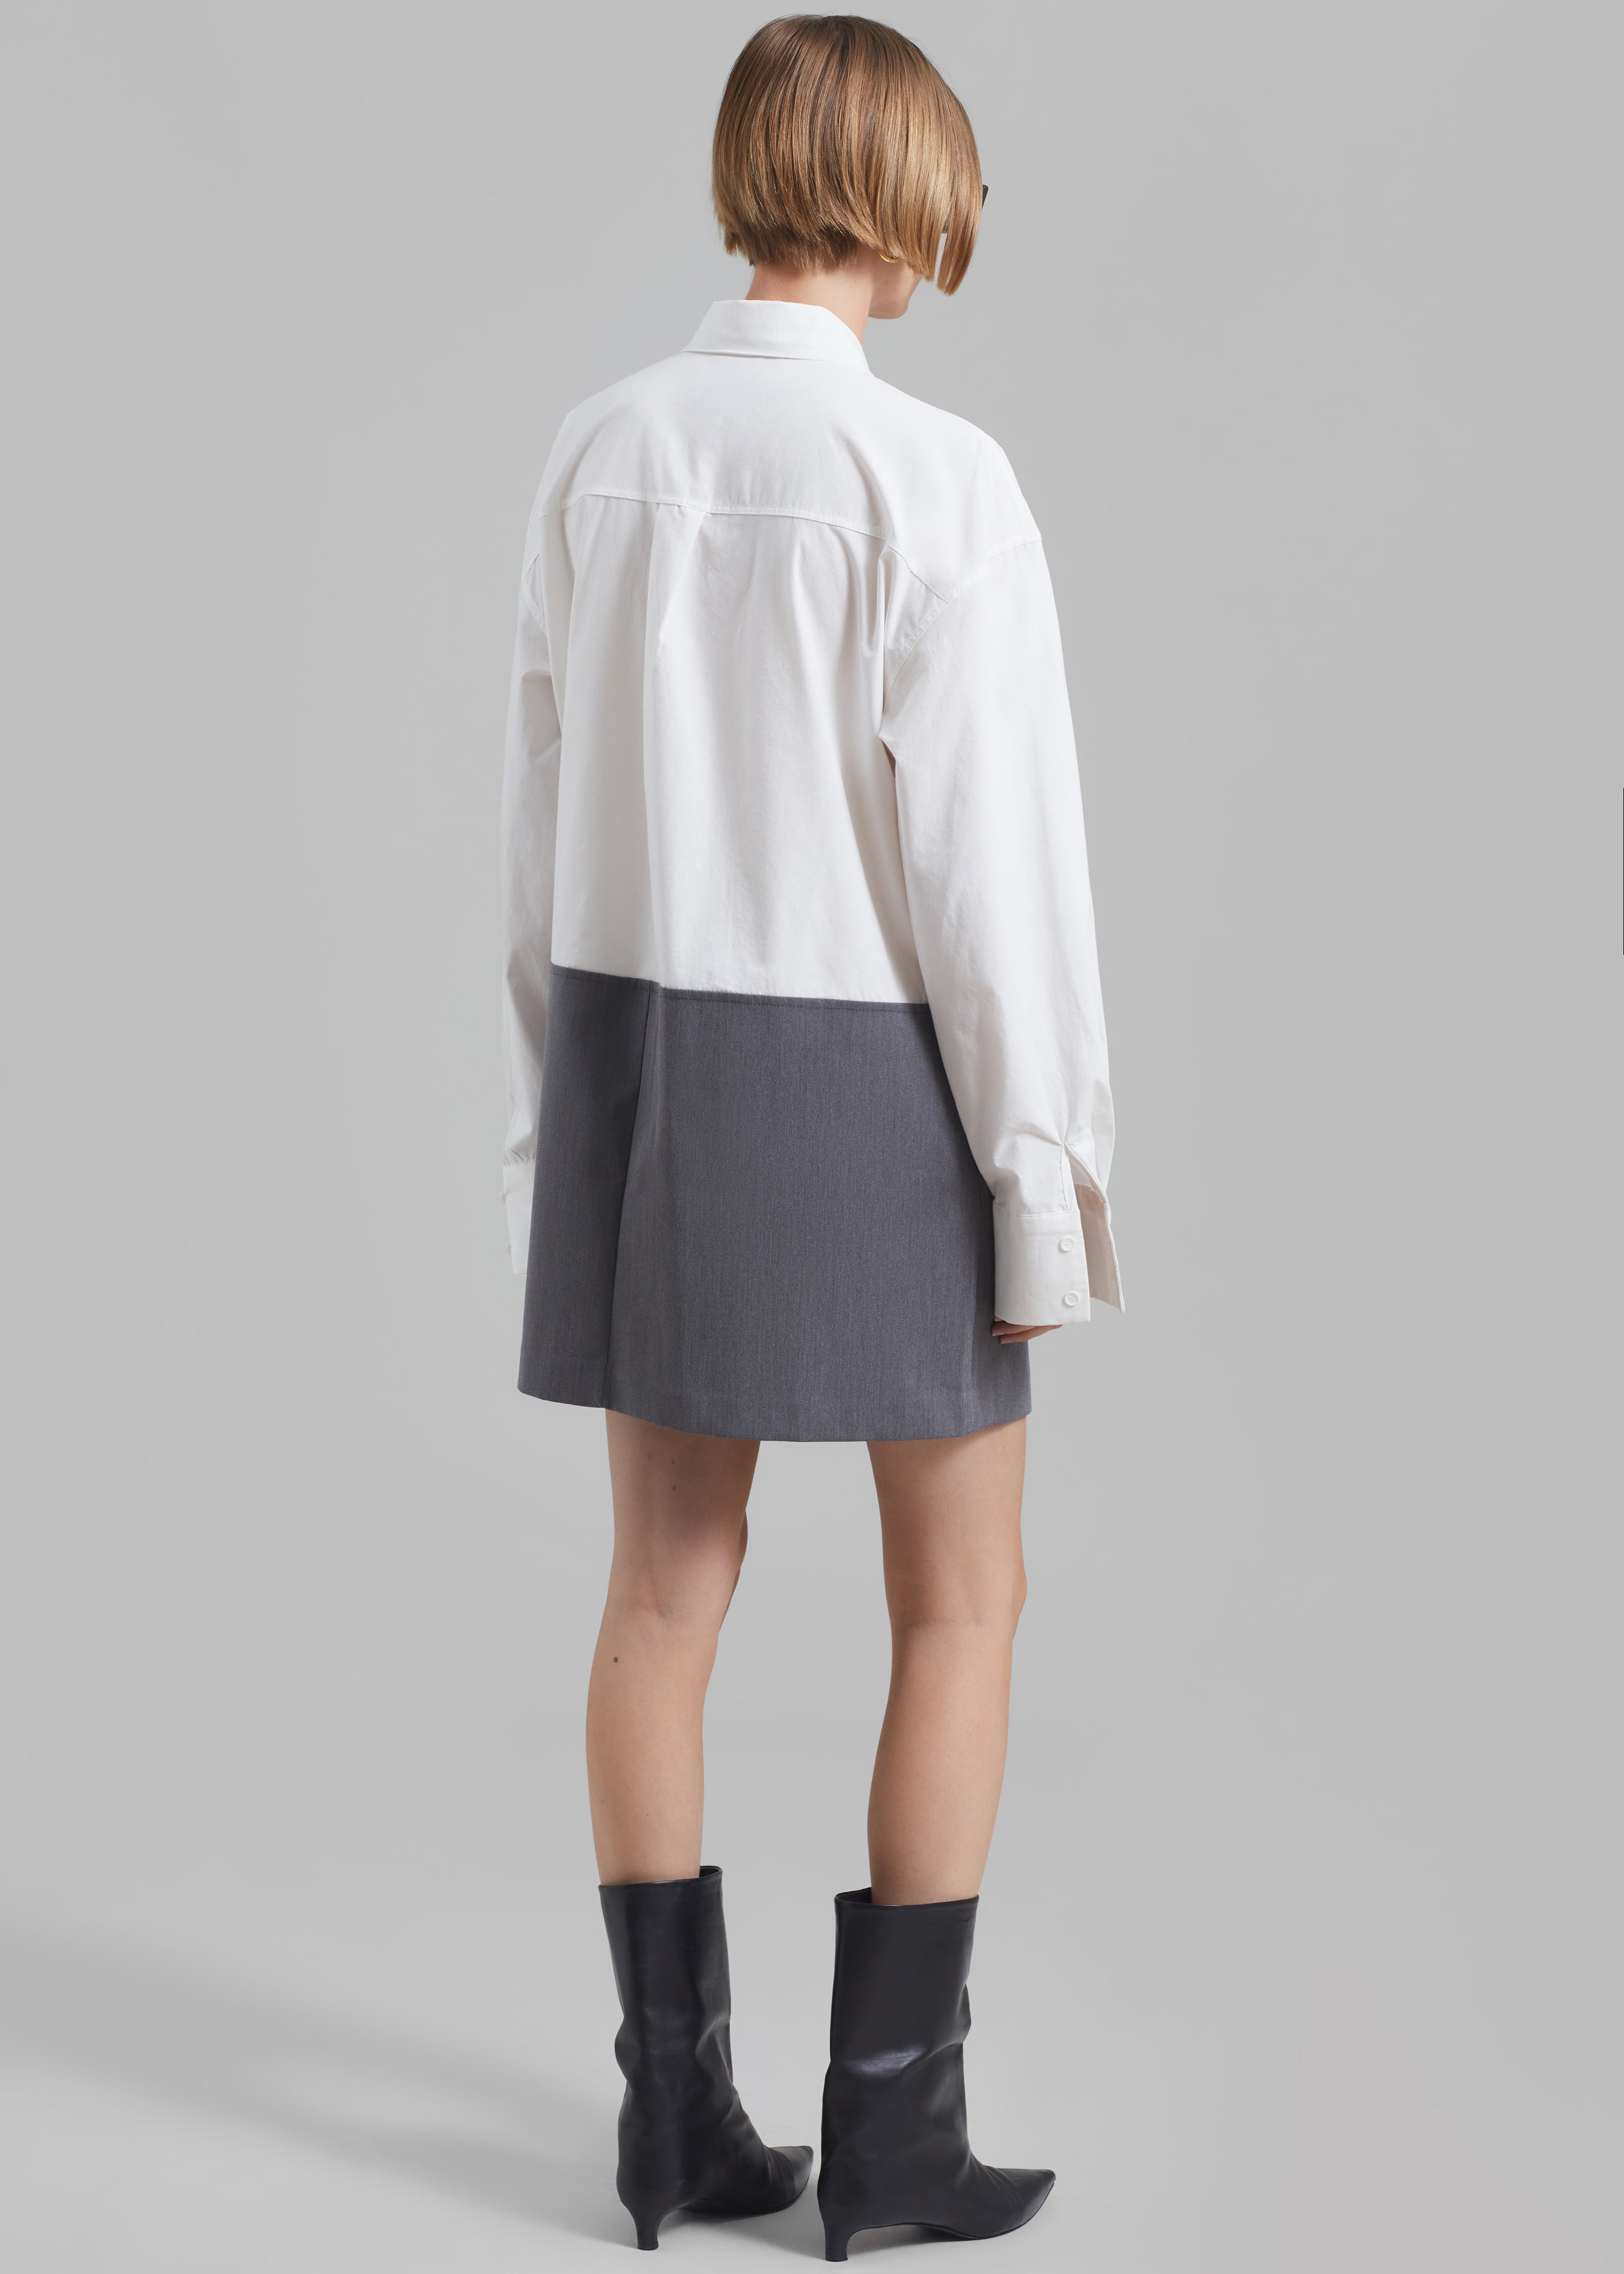 Marissa Shirt Dress - White/Grey - 6